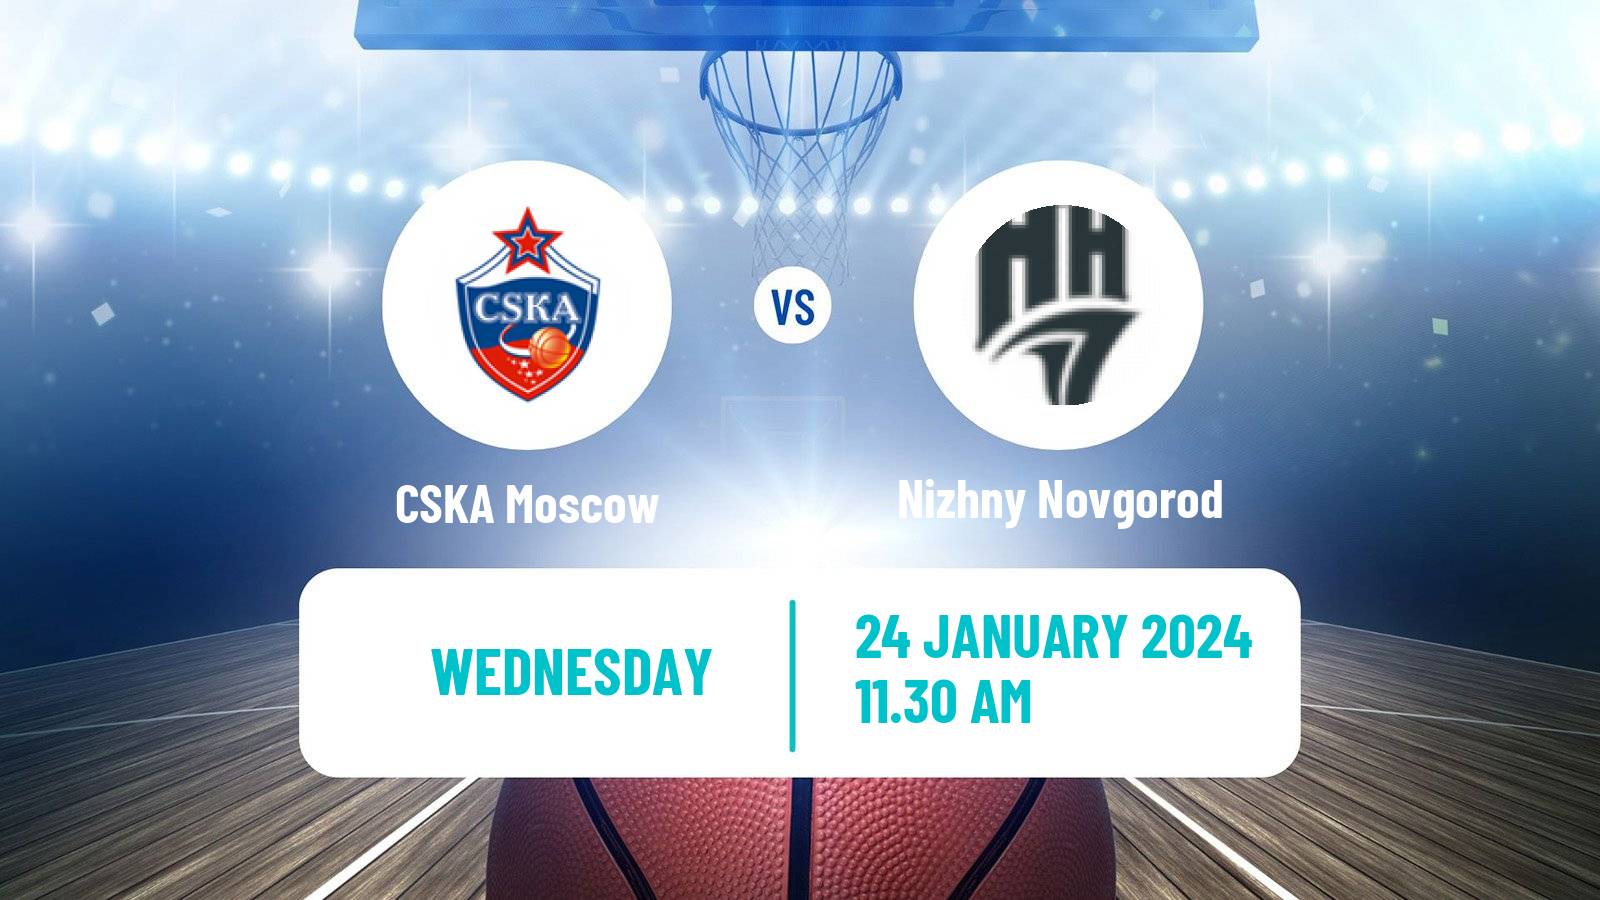 Basketball VTB United League CSKA Moscow - Nizhny Novgorod